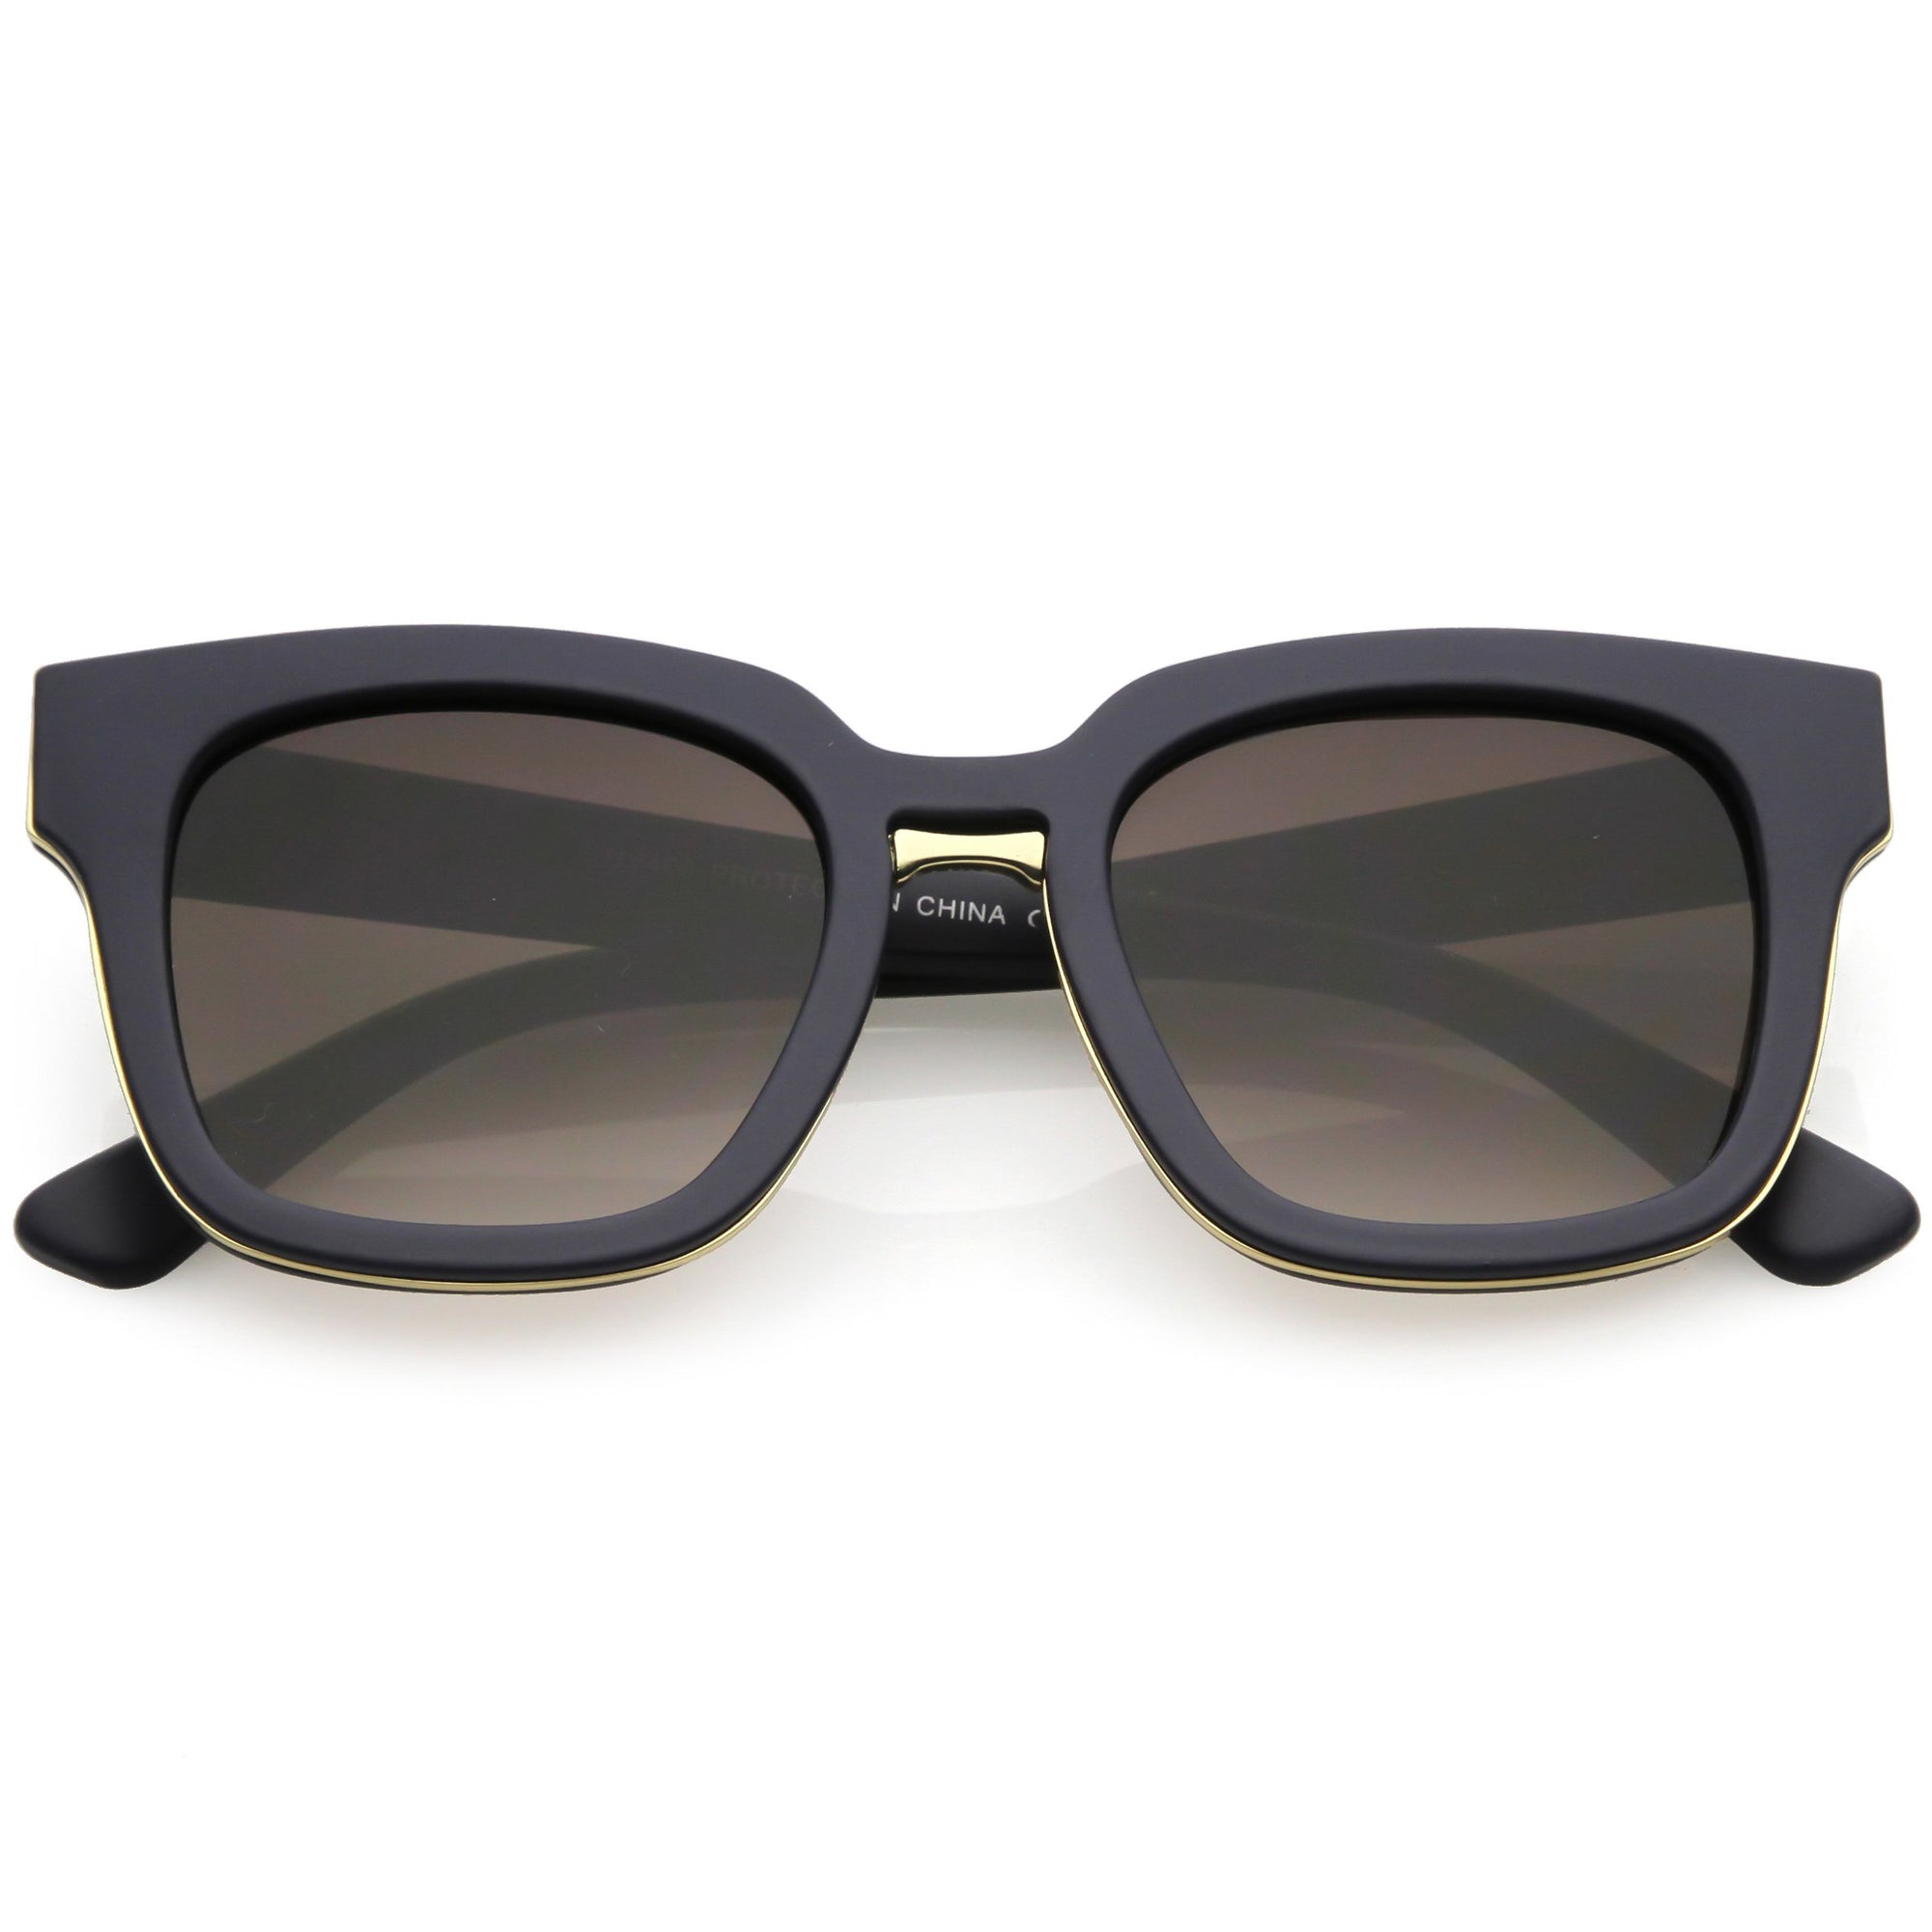 Indie Dapper Fashion Horned Rim Flat Lens Sunglasses - zeroUV